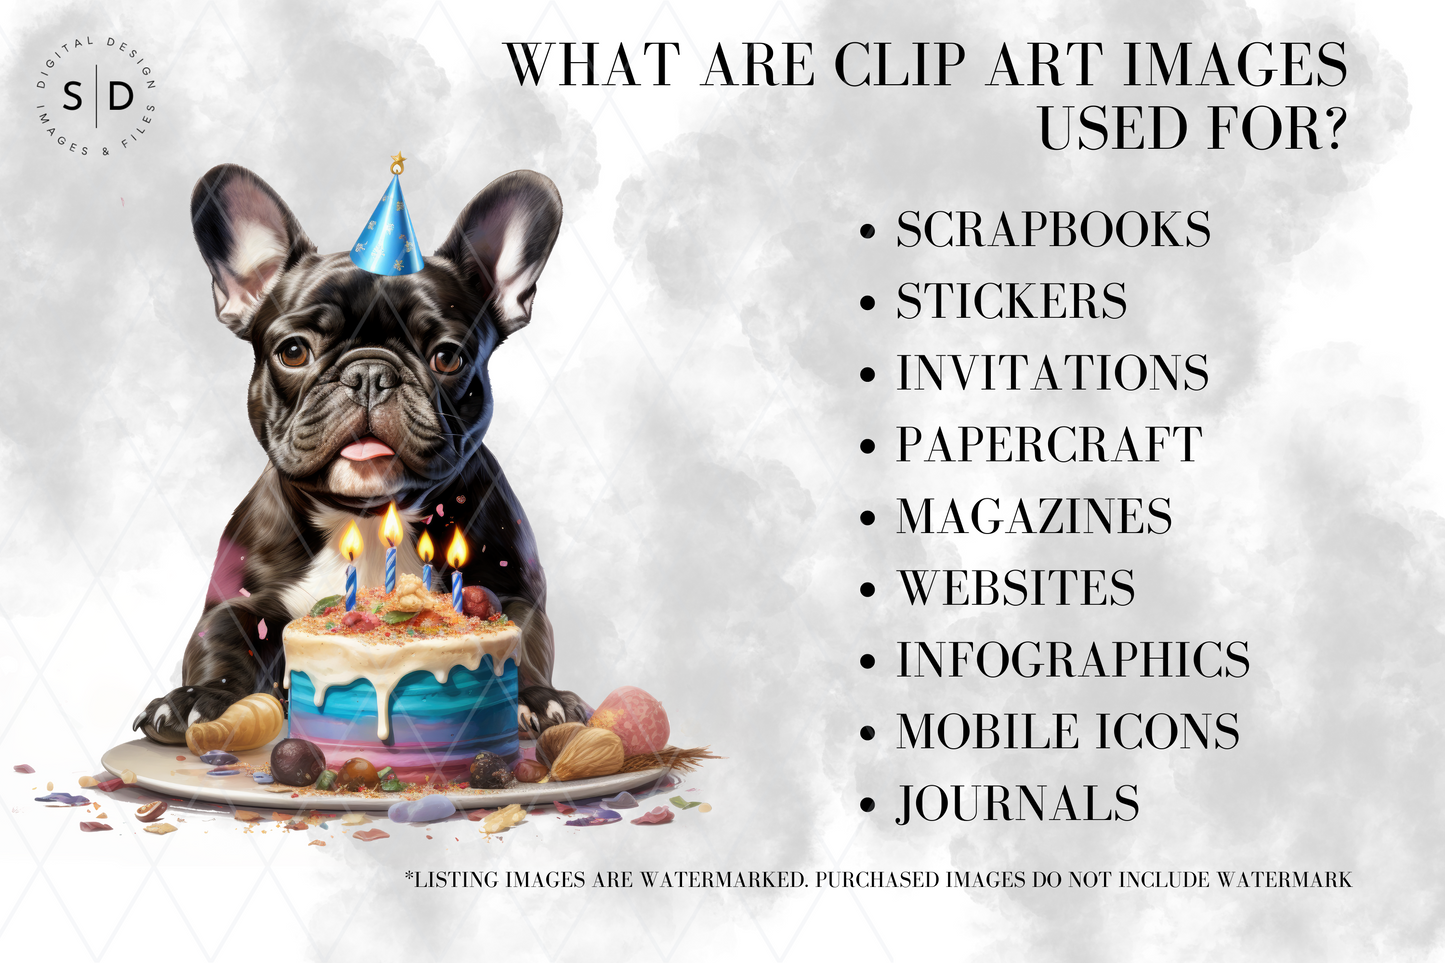 Birthday Puppies Clip Art Bundle (80+ Images)